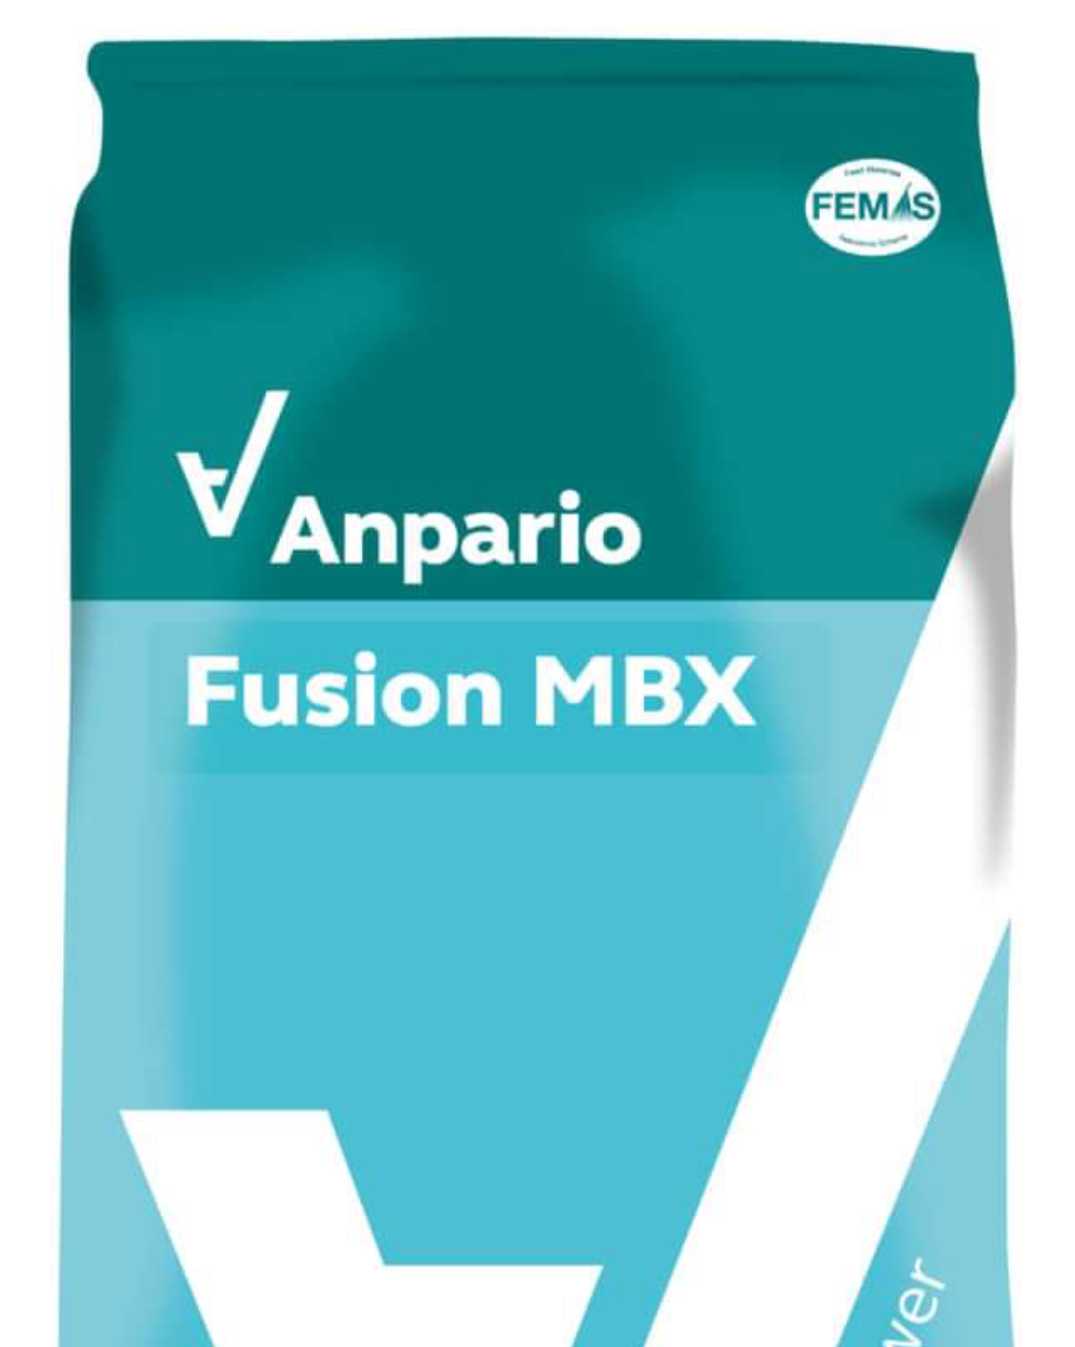 Anpario Fusion MBX!